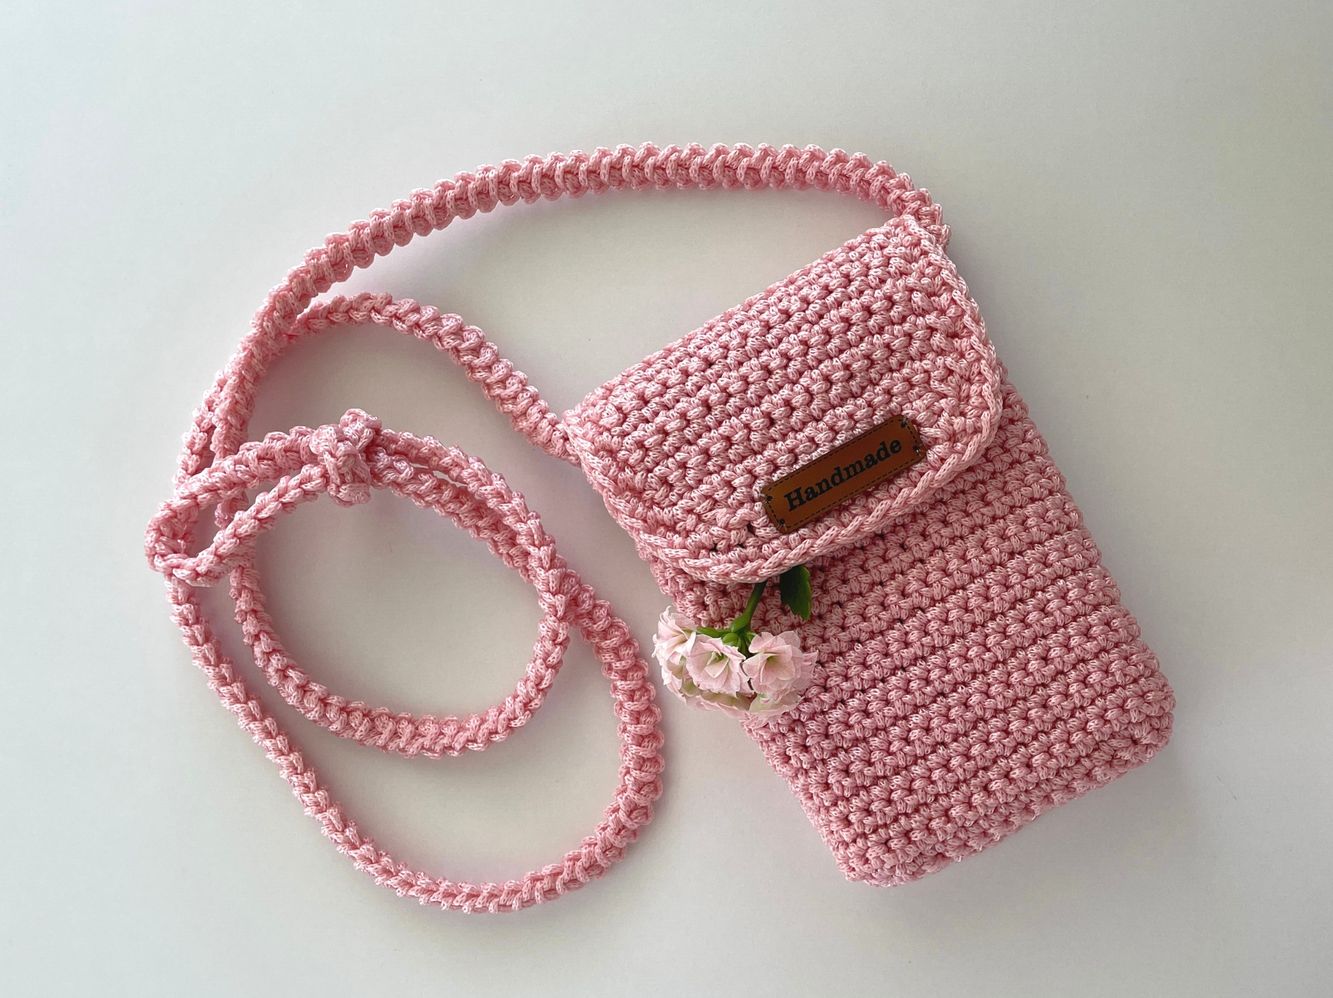 Crochet cell phone pouch